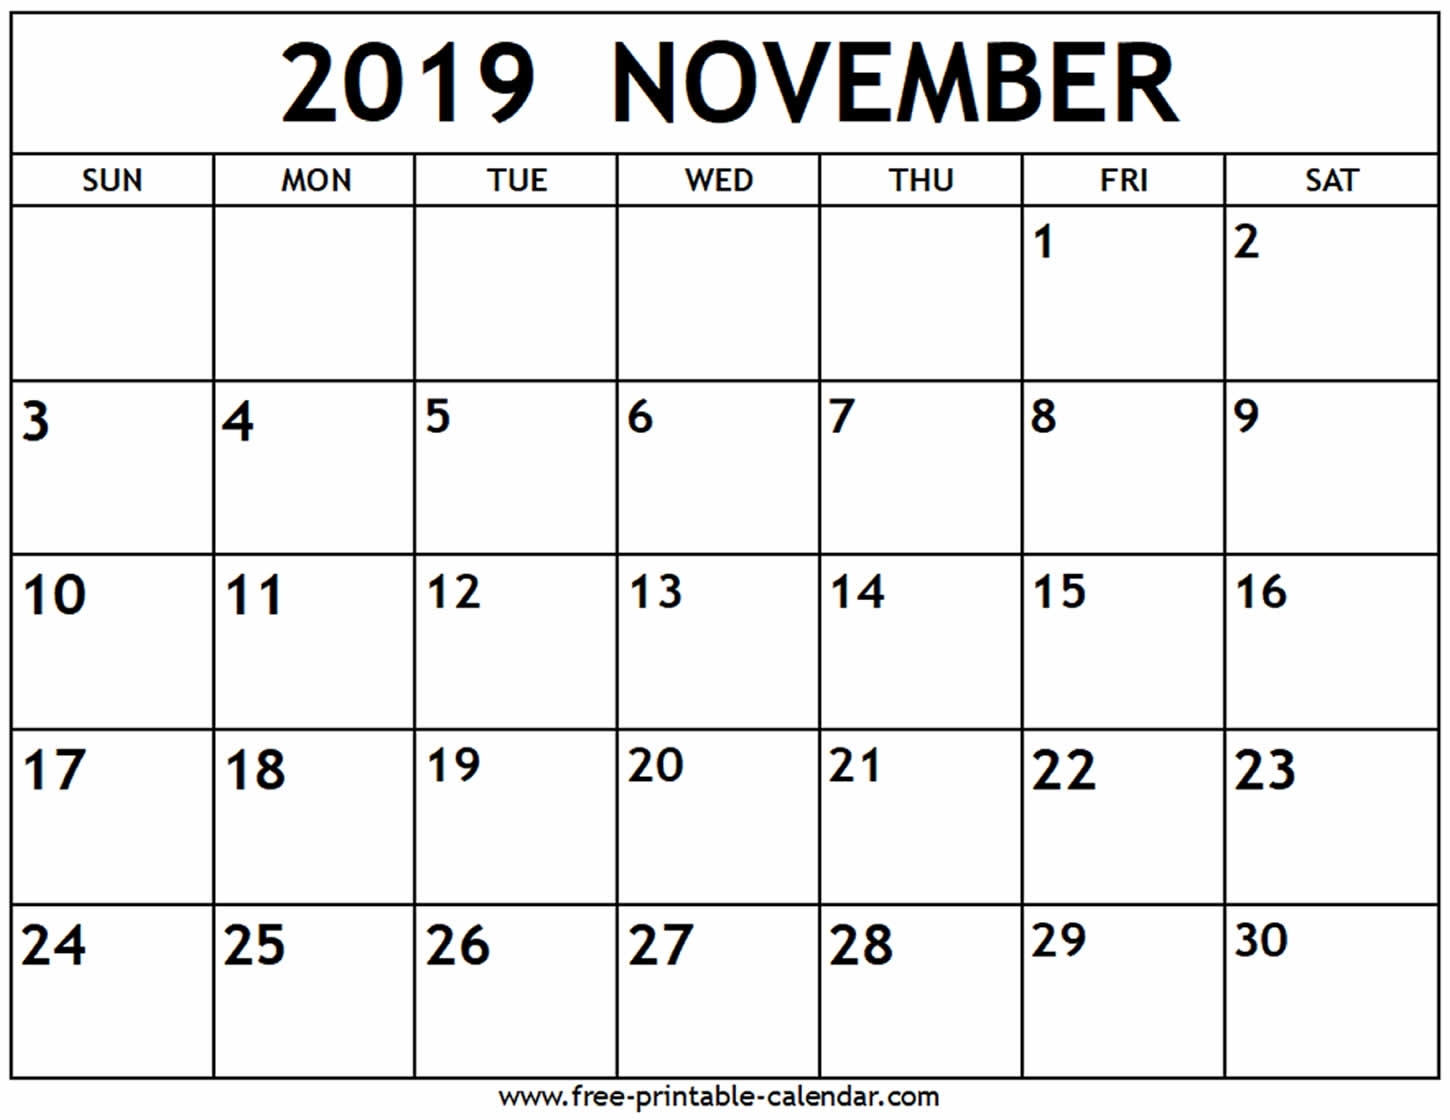 November 2019 Calendar - Free-Printable-Calendar